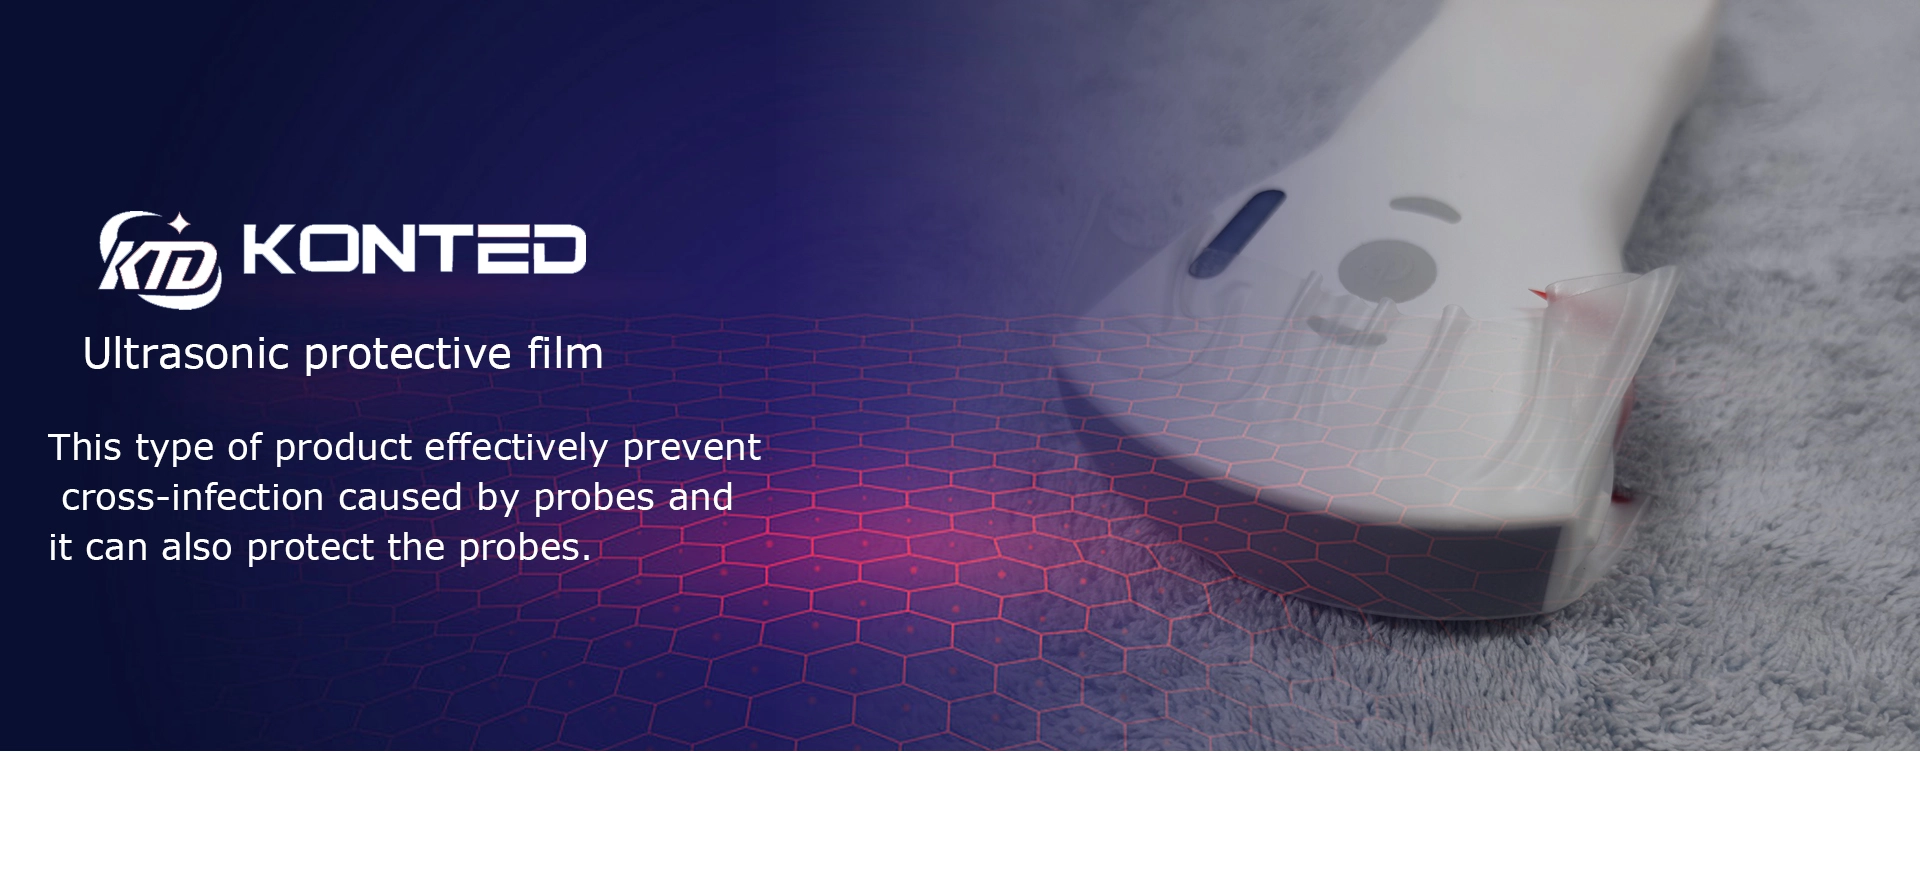 Ultrasonic protective film